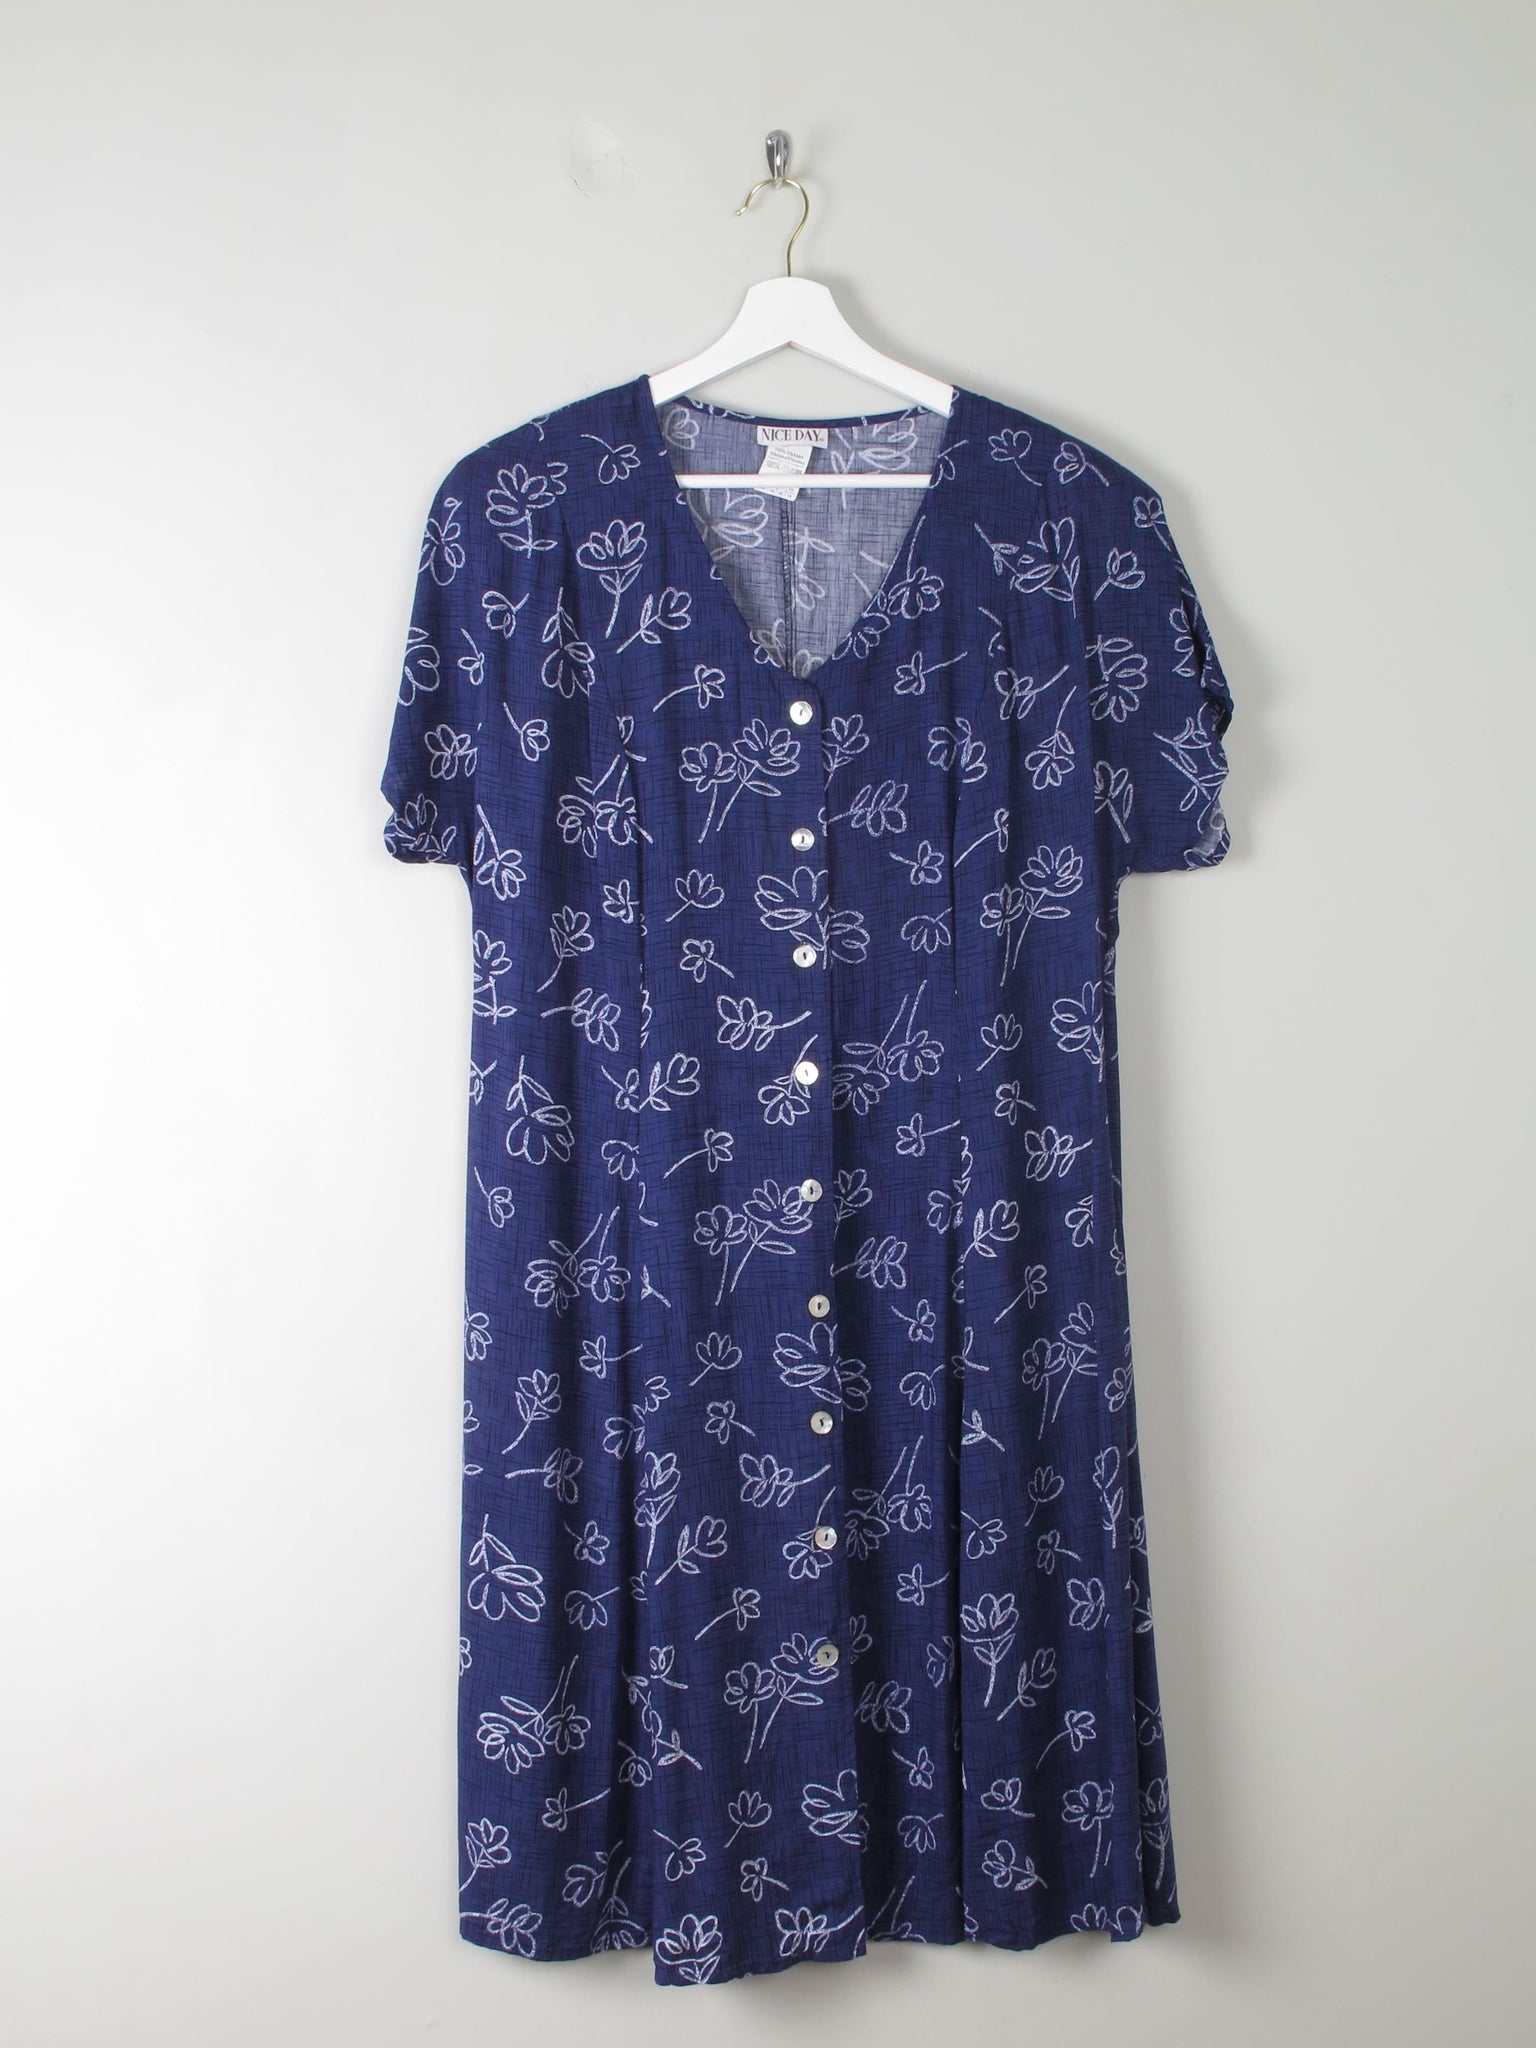 Vintage Navy Printed Dress L/XL - The Harlequin